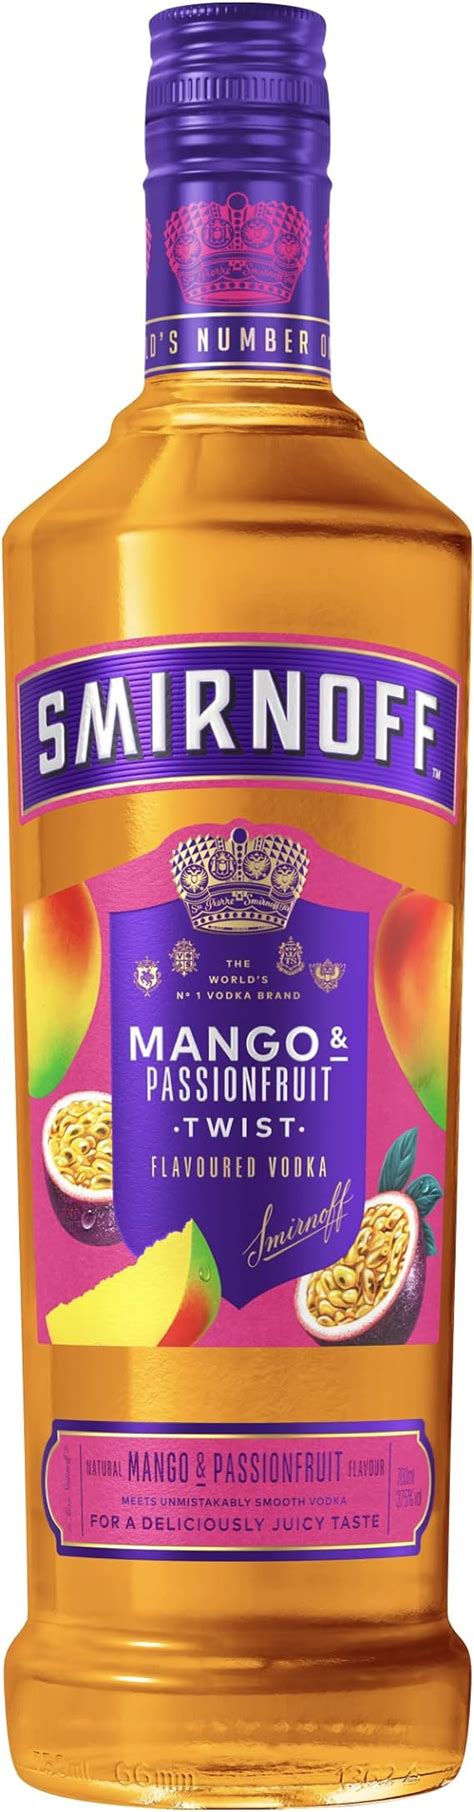 Smirnoff Mango And Passionfruit Twist Flavoured Vodka 70cl Uk Grocery